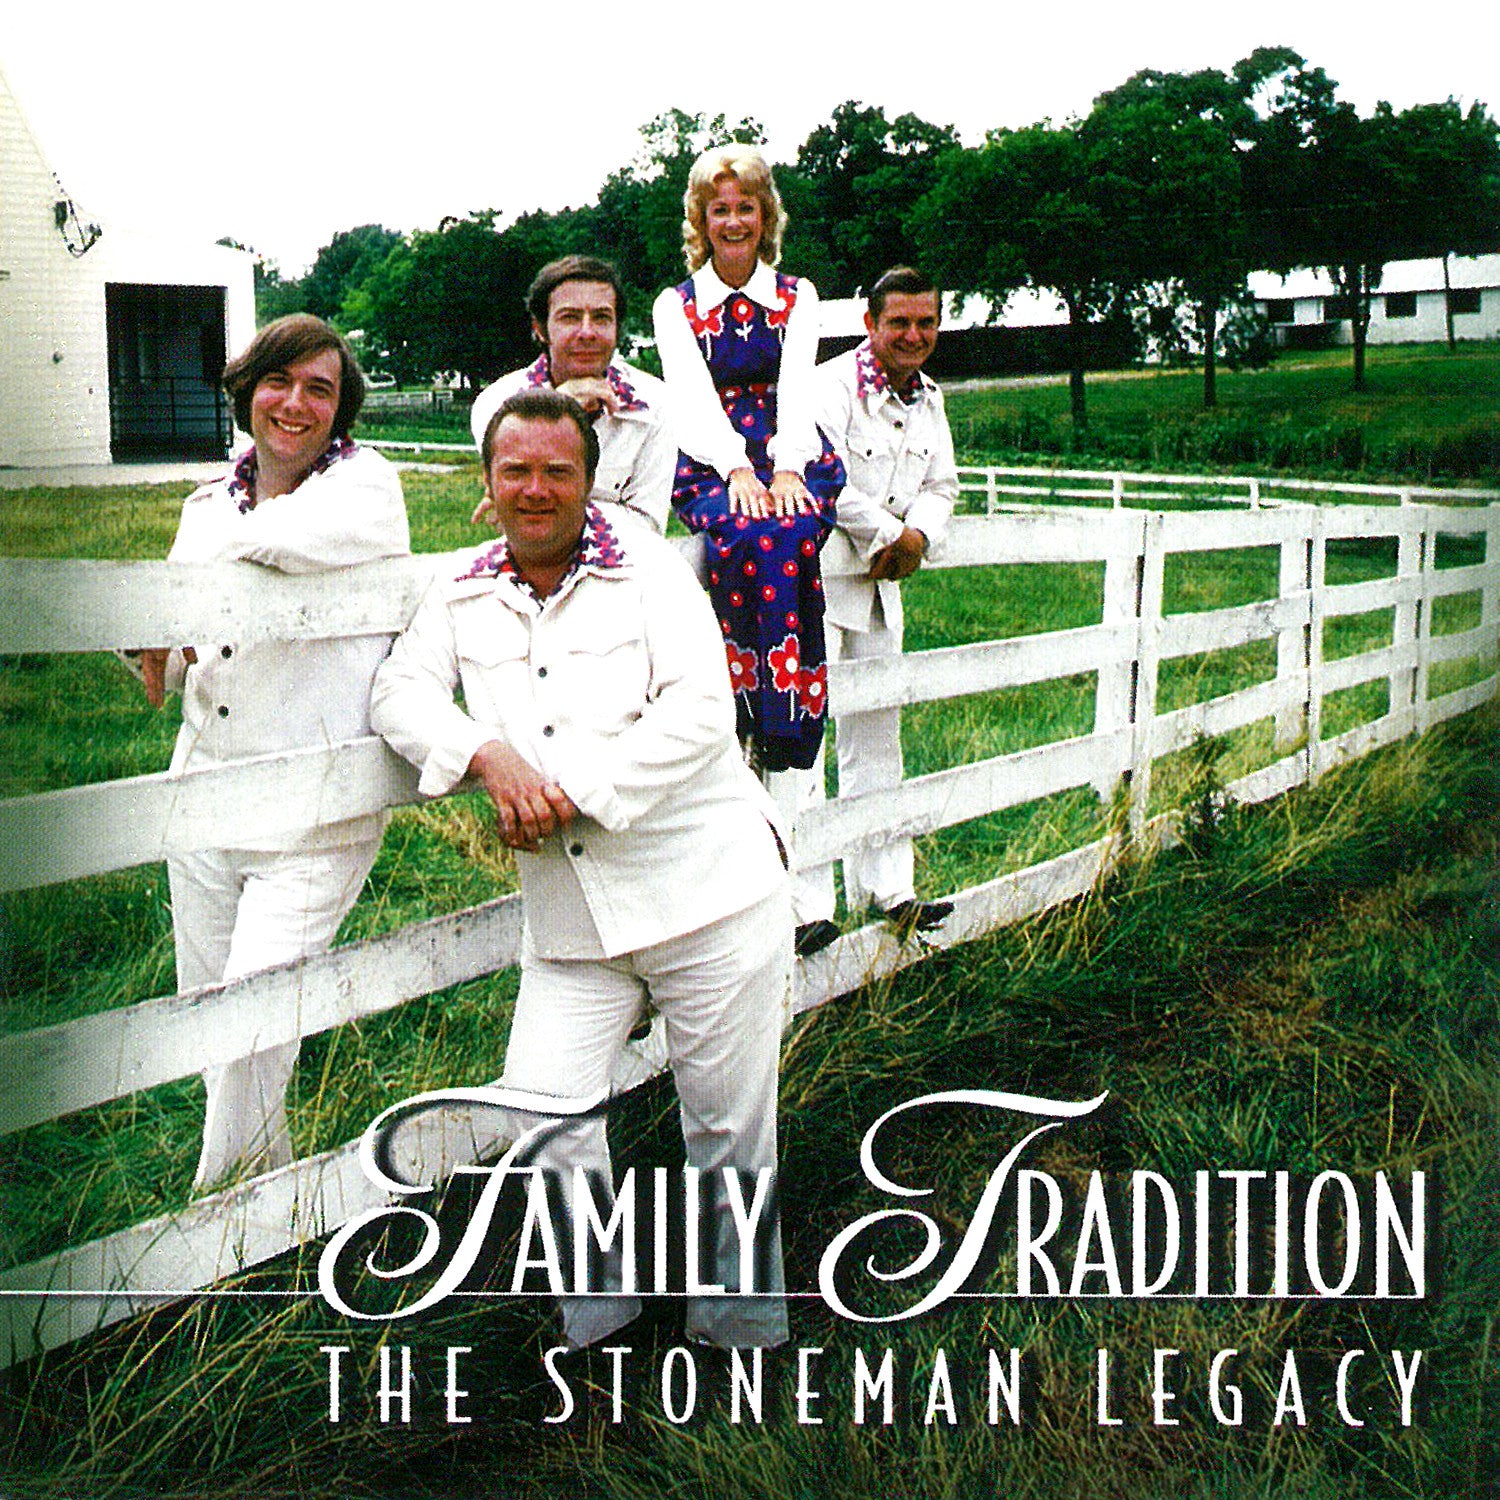 The Stoneman Legacy: Family Tradition